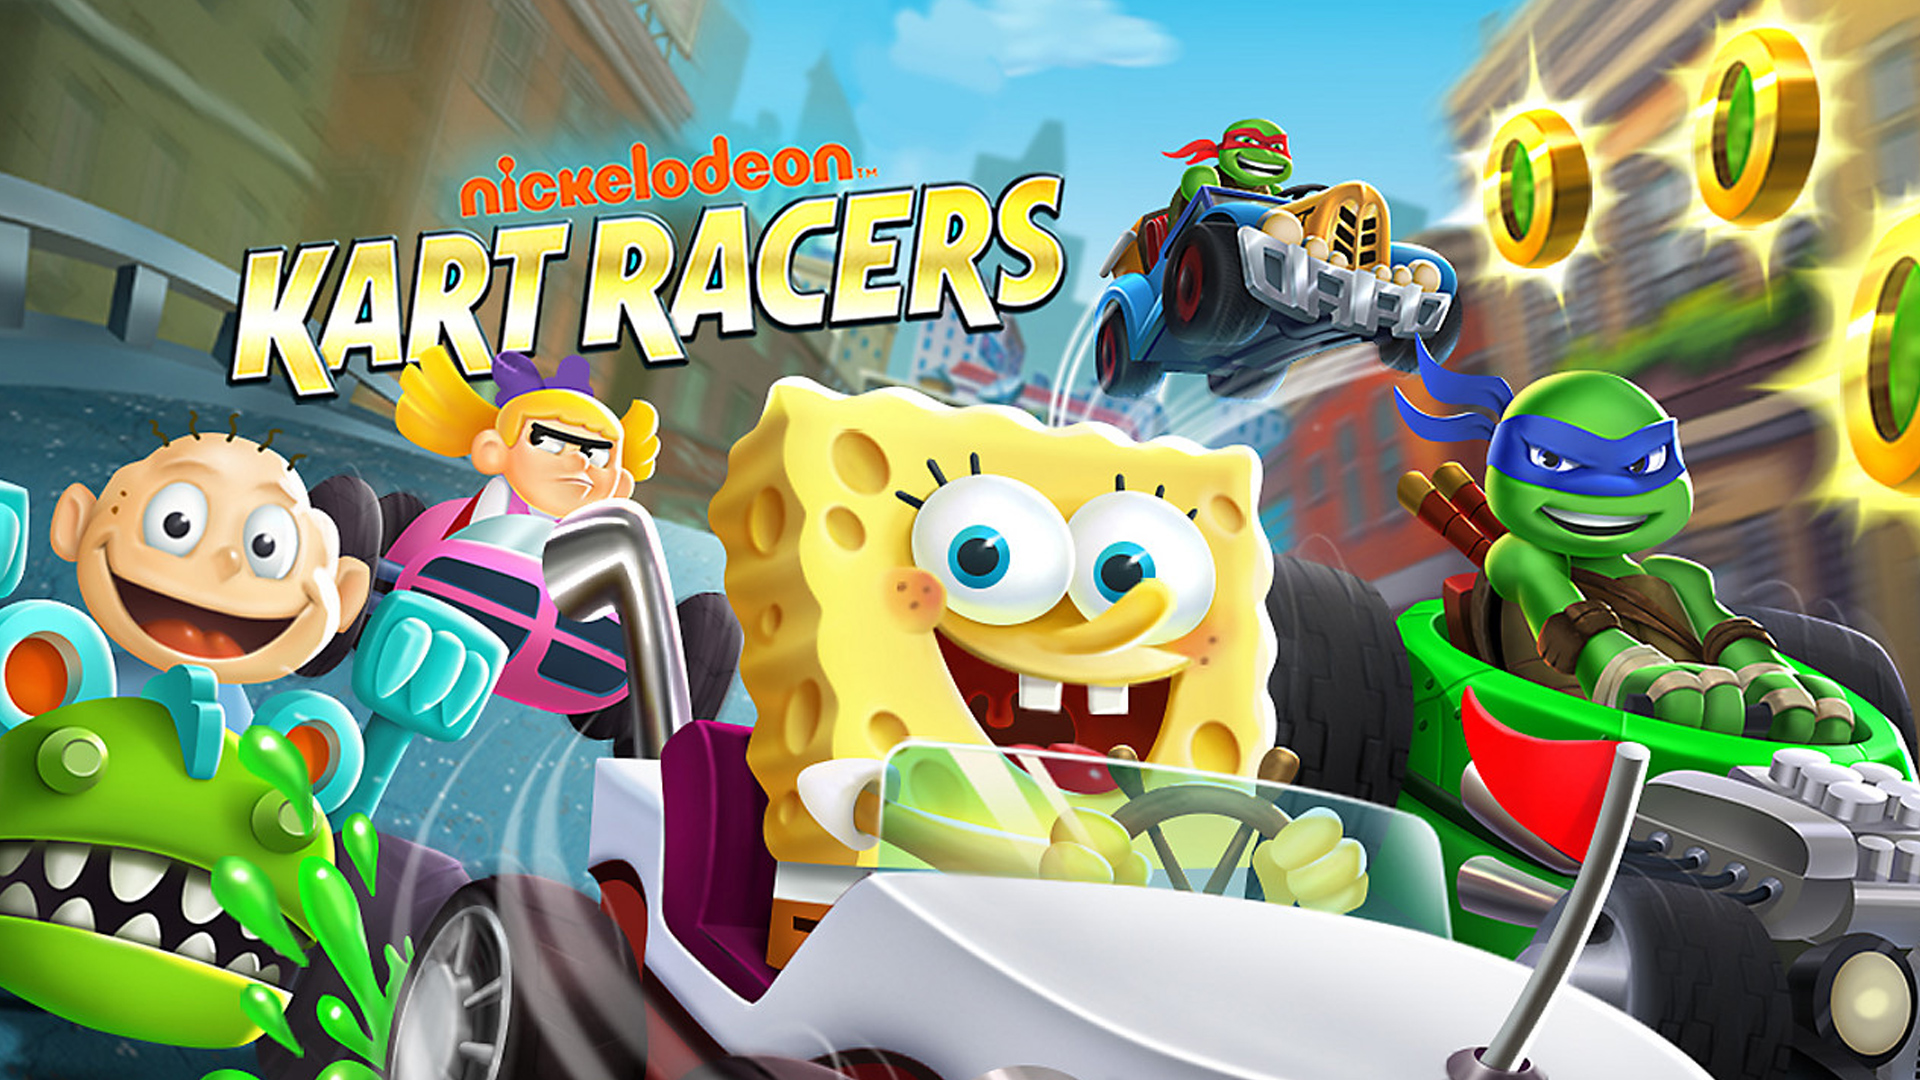 Nickelodeon Kart Racers review | GodisaGeek.com